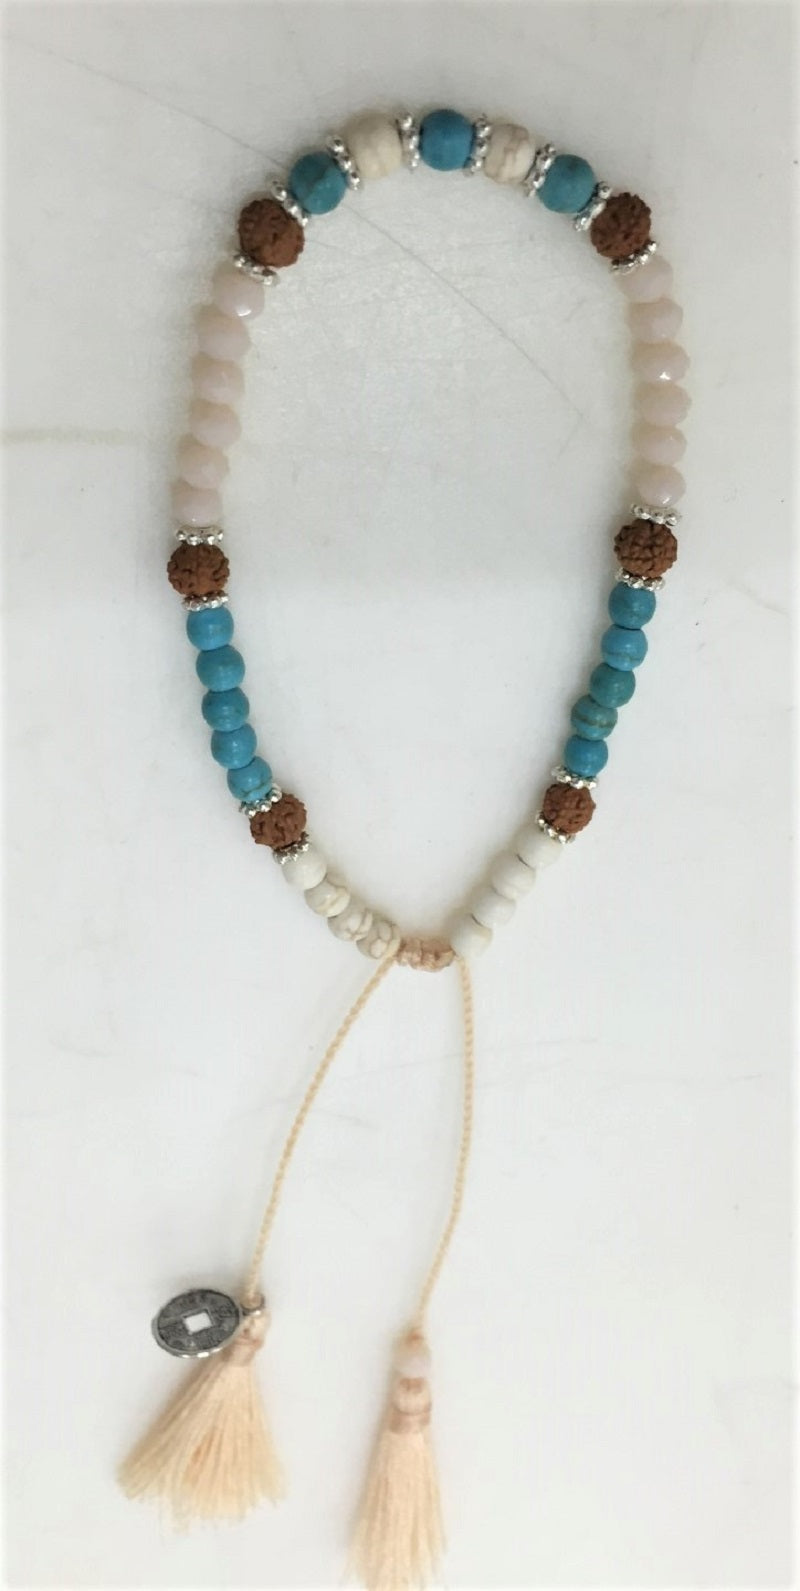 bracelet - pull tie - crystal/stone - turq/cream/brown